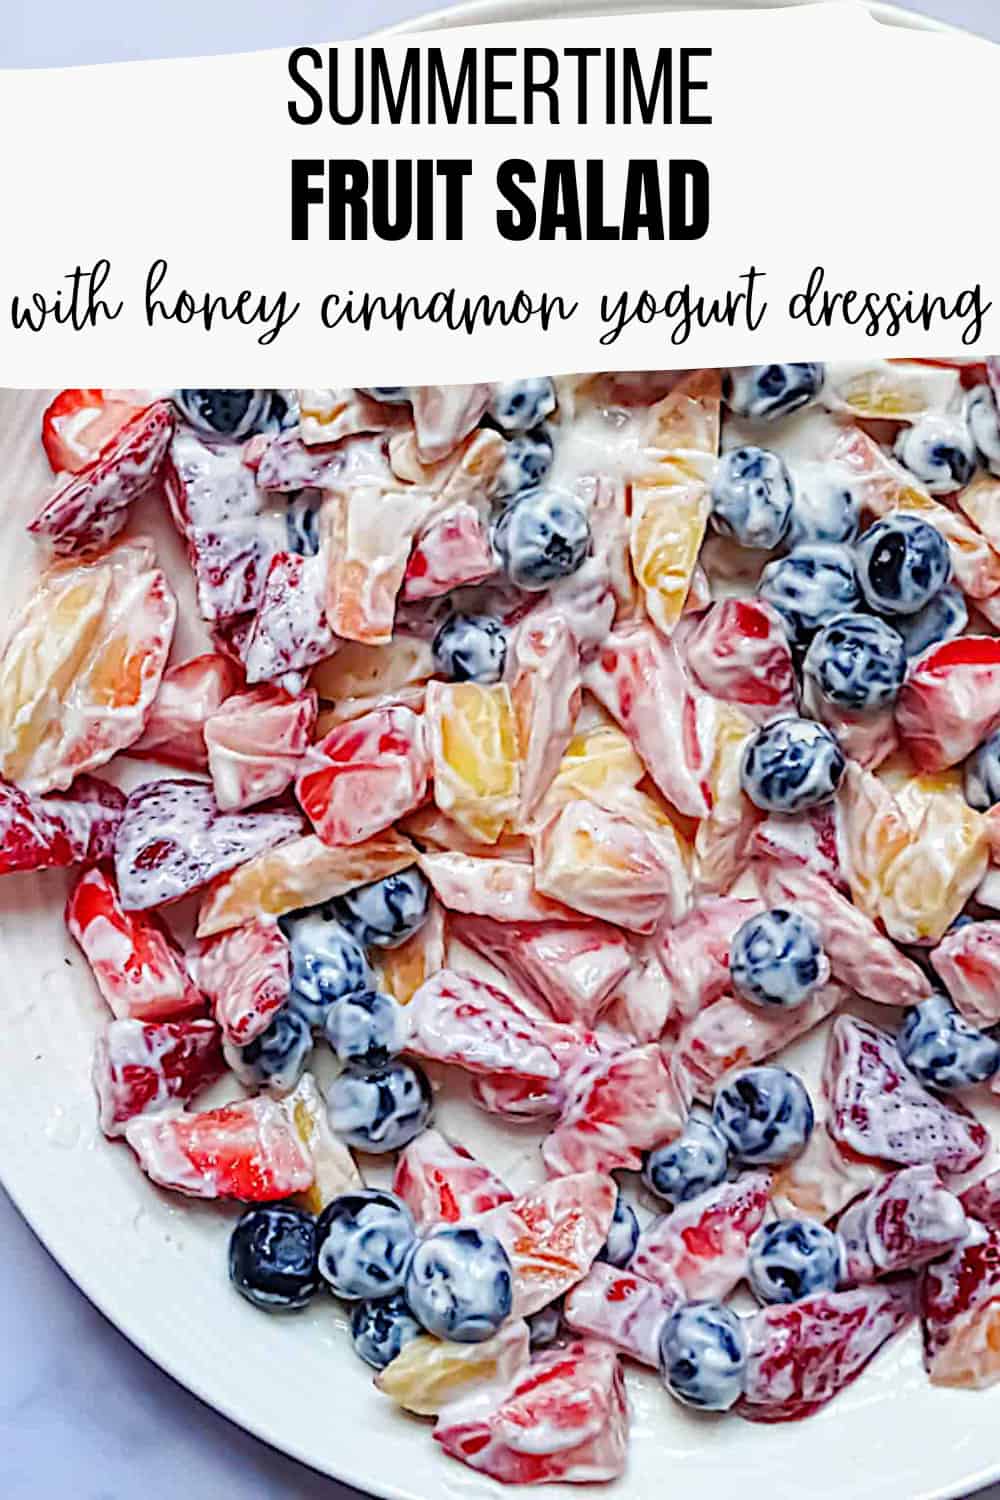 Summer Berry Salad with Yogurt Dressing